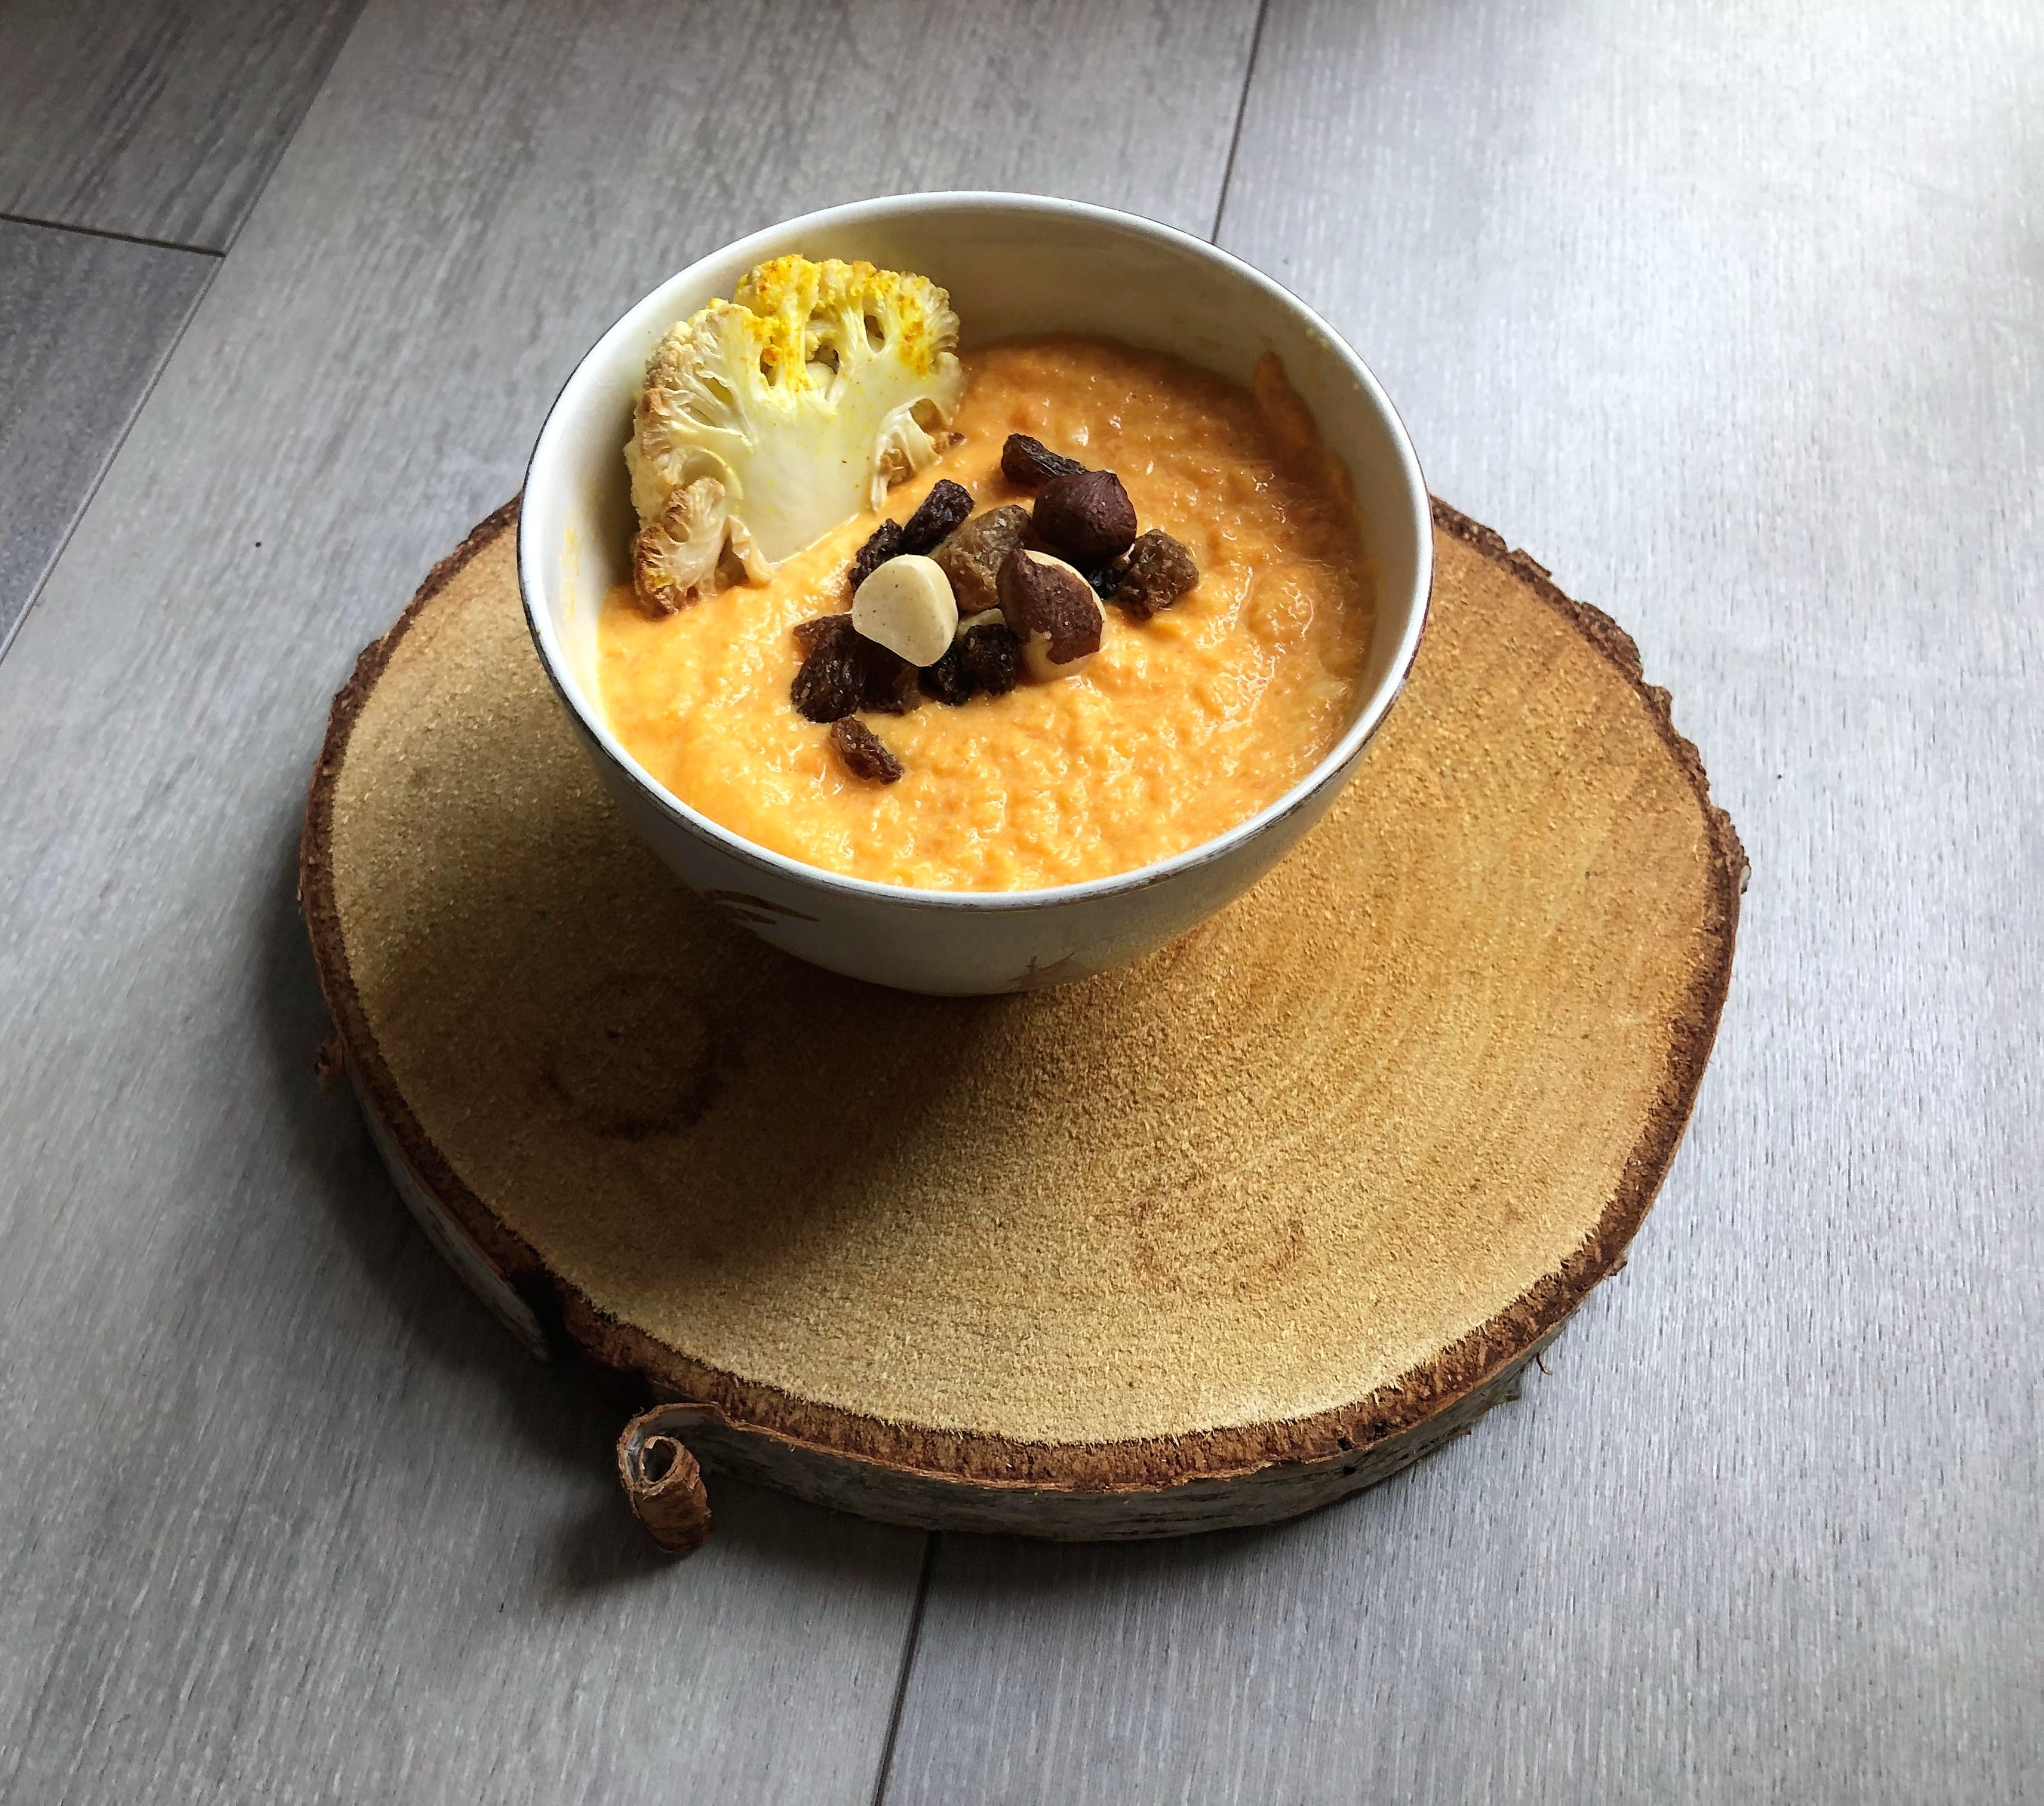 La receta de la semana: Crema de zanahoria caramelizada y naranja